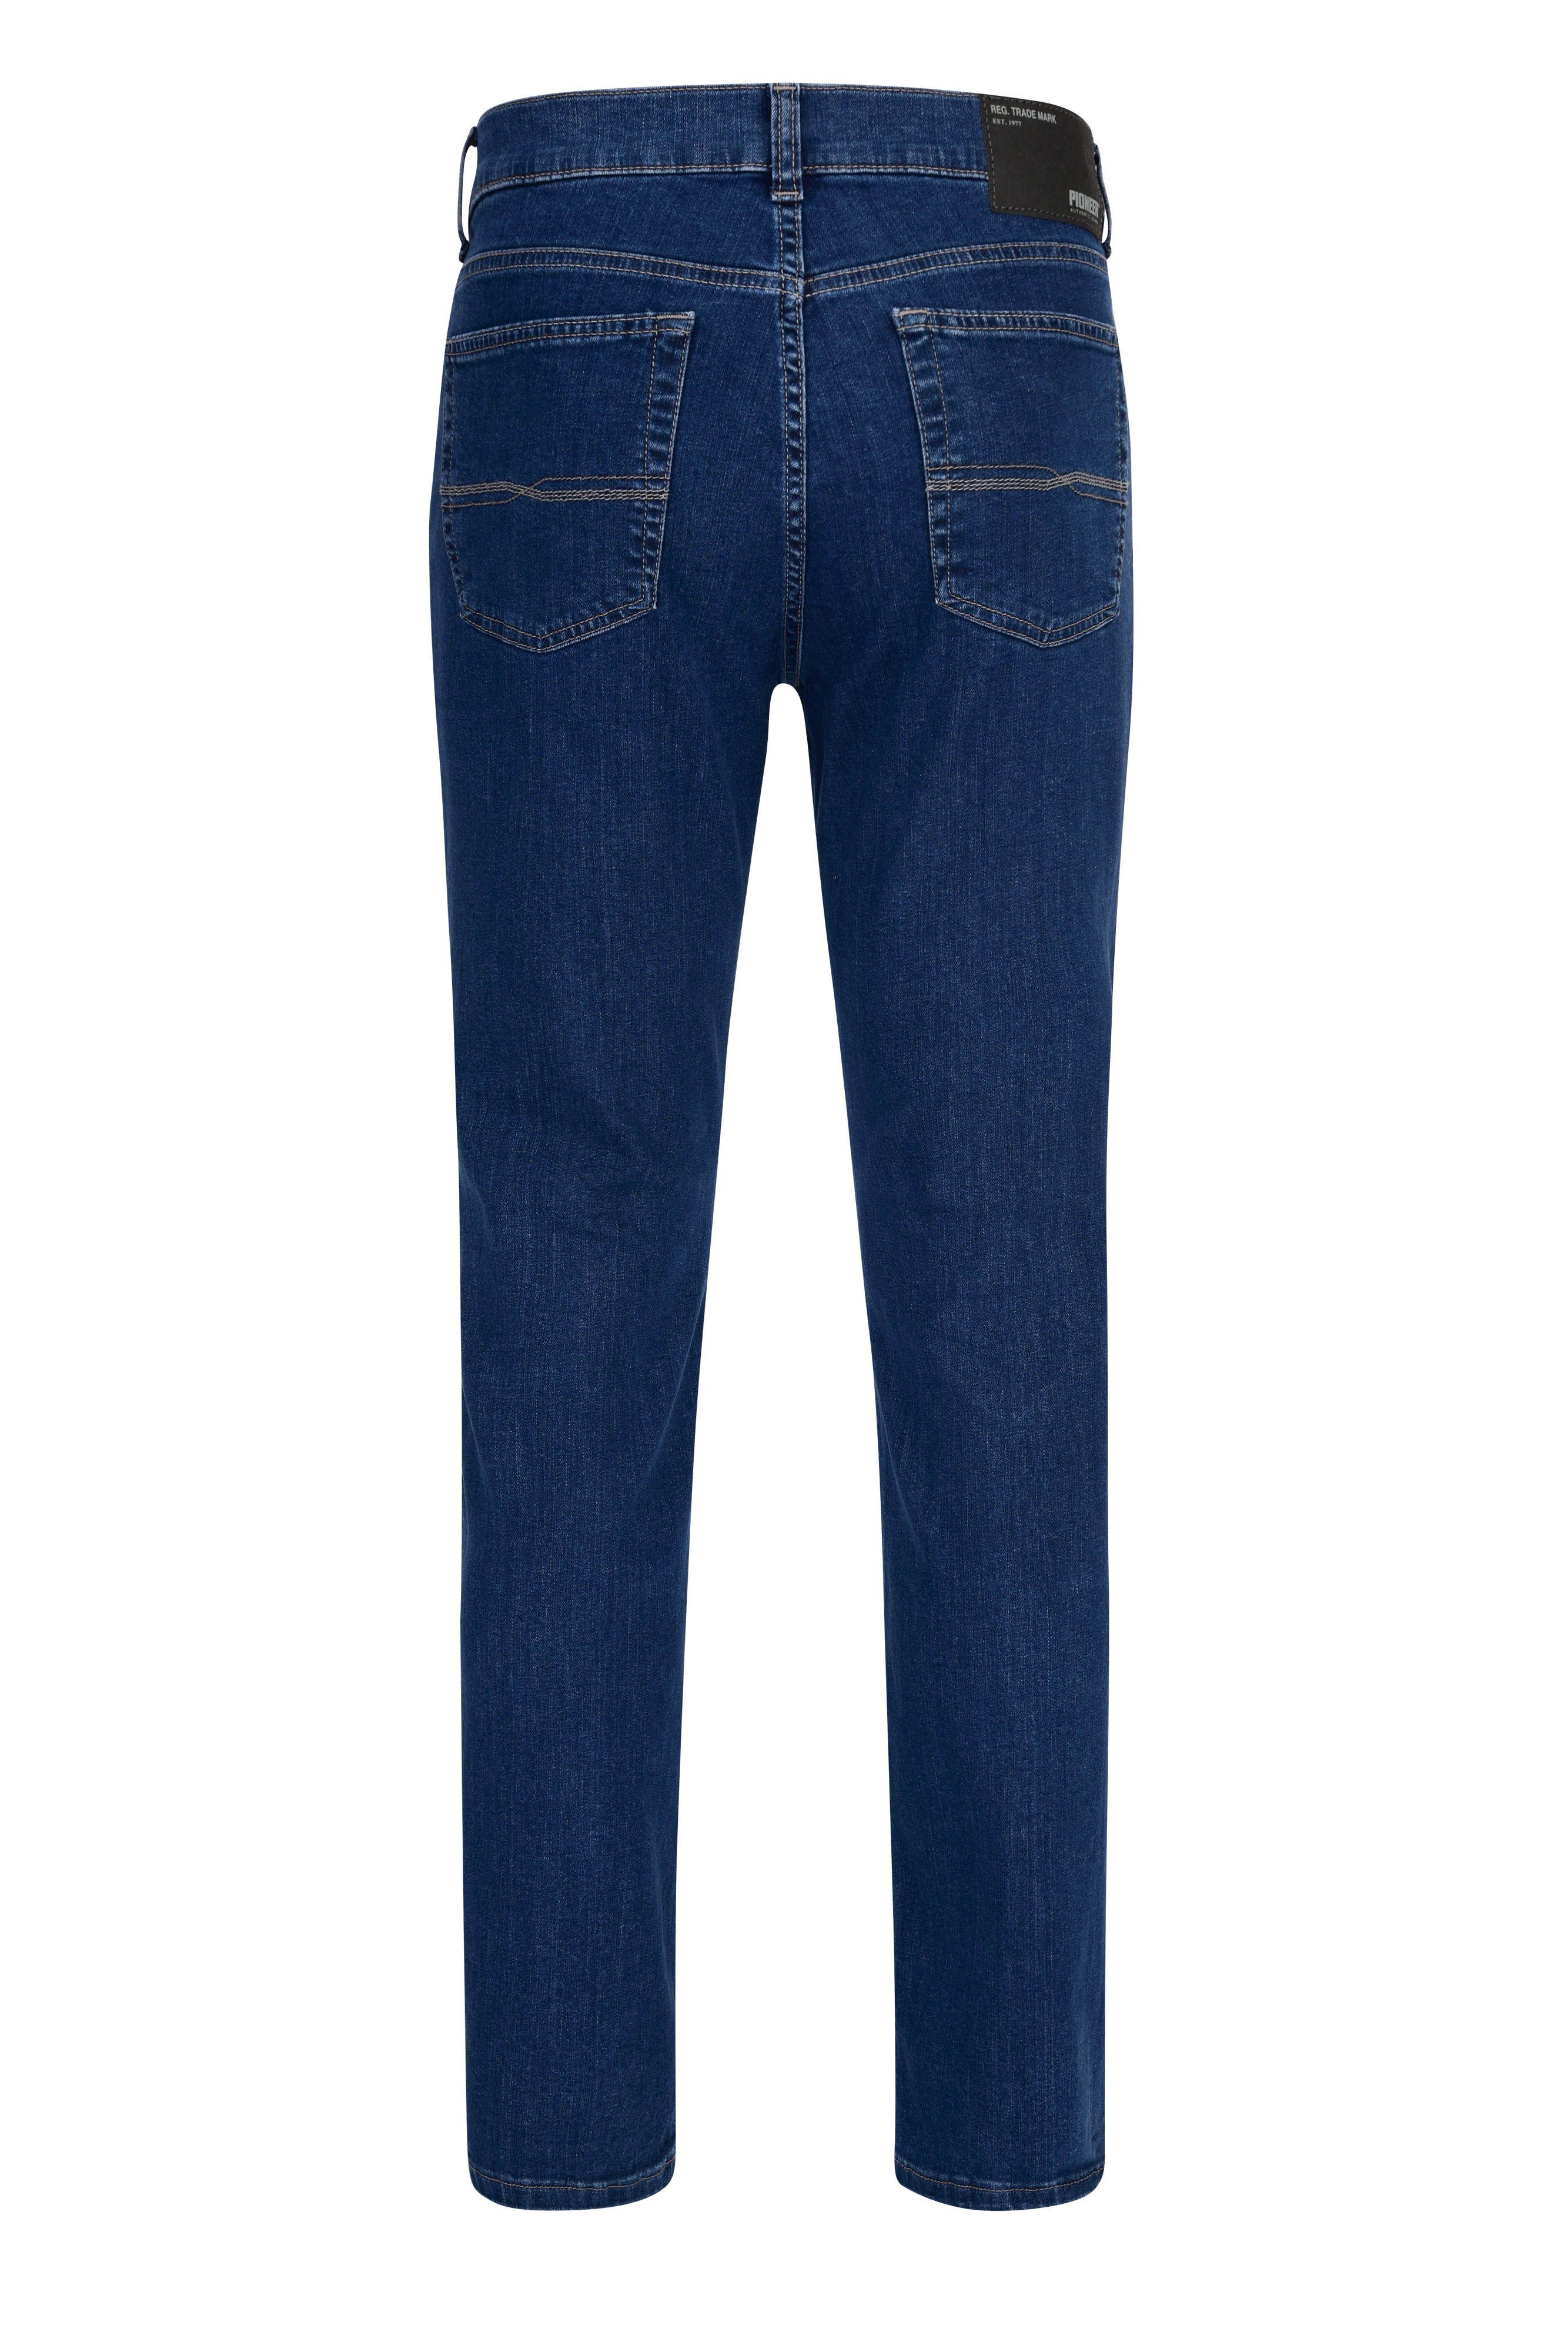 Jeans Edition Manufaktur - 9818.05 Pioneer 5-Pocket-Jeans RON PIONEER Jeans premium blue Authentic mid 1184